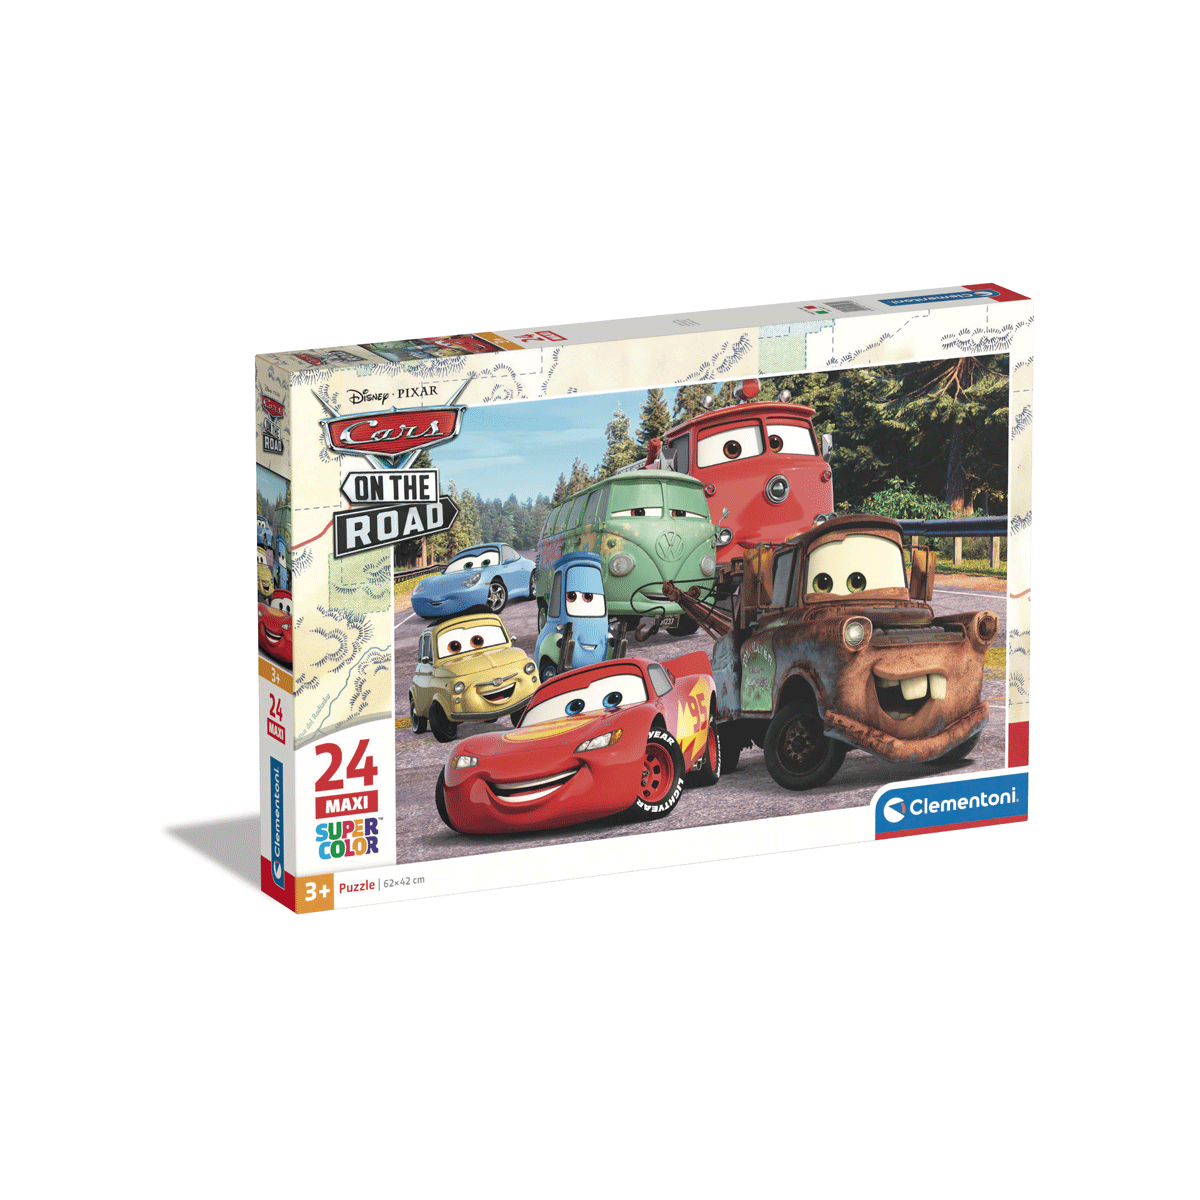 Clementoni supercolor puzzle disney cars on the road - 24 maxi pezzi, puzzle bambini 3 anni - 234, CLEMENTONI, Cars